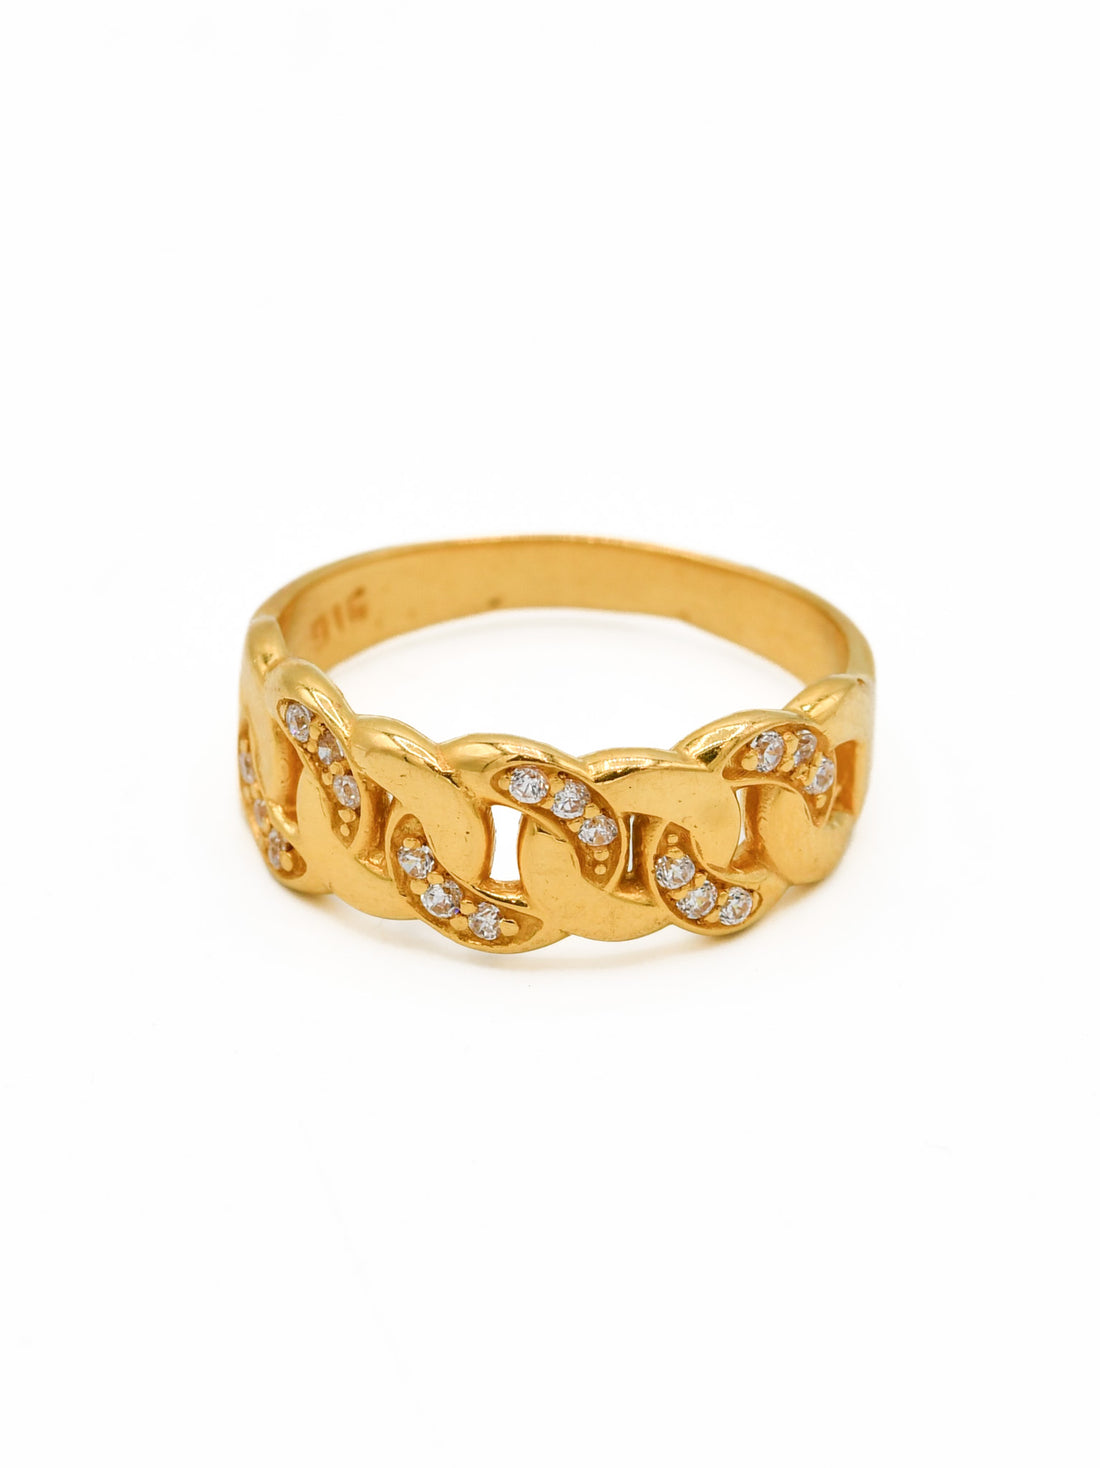 22ct Gold CZ Ladies Ring